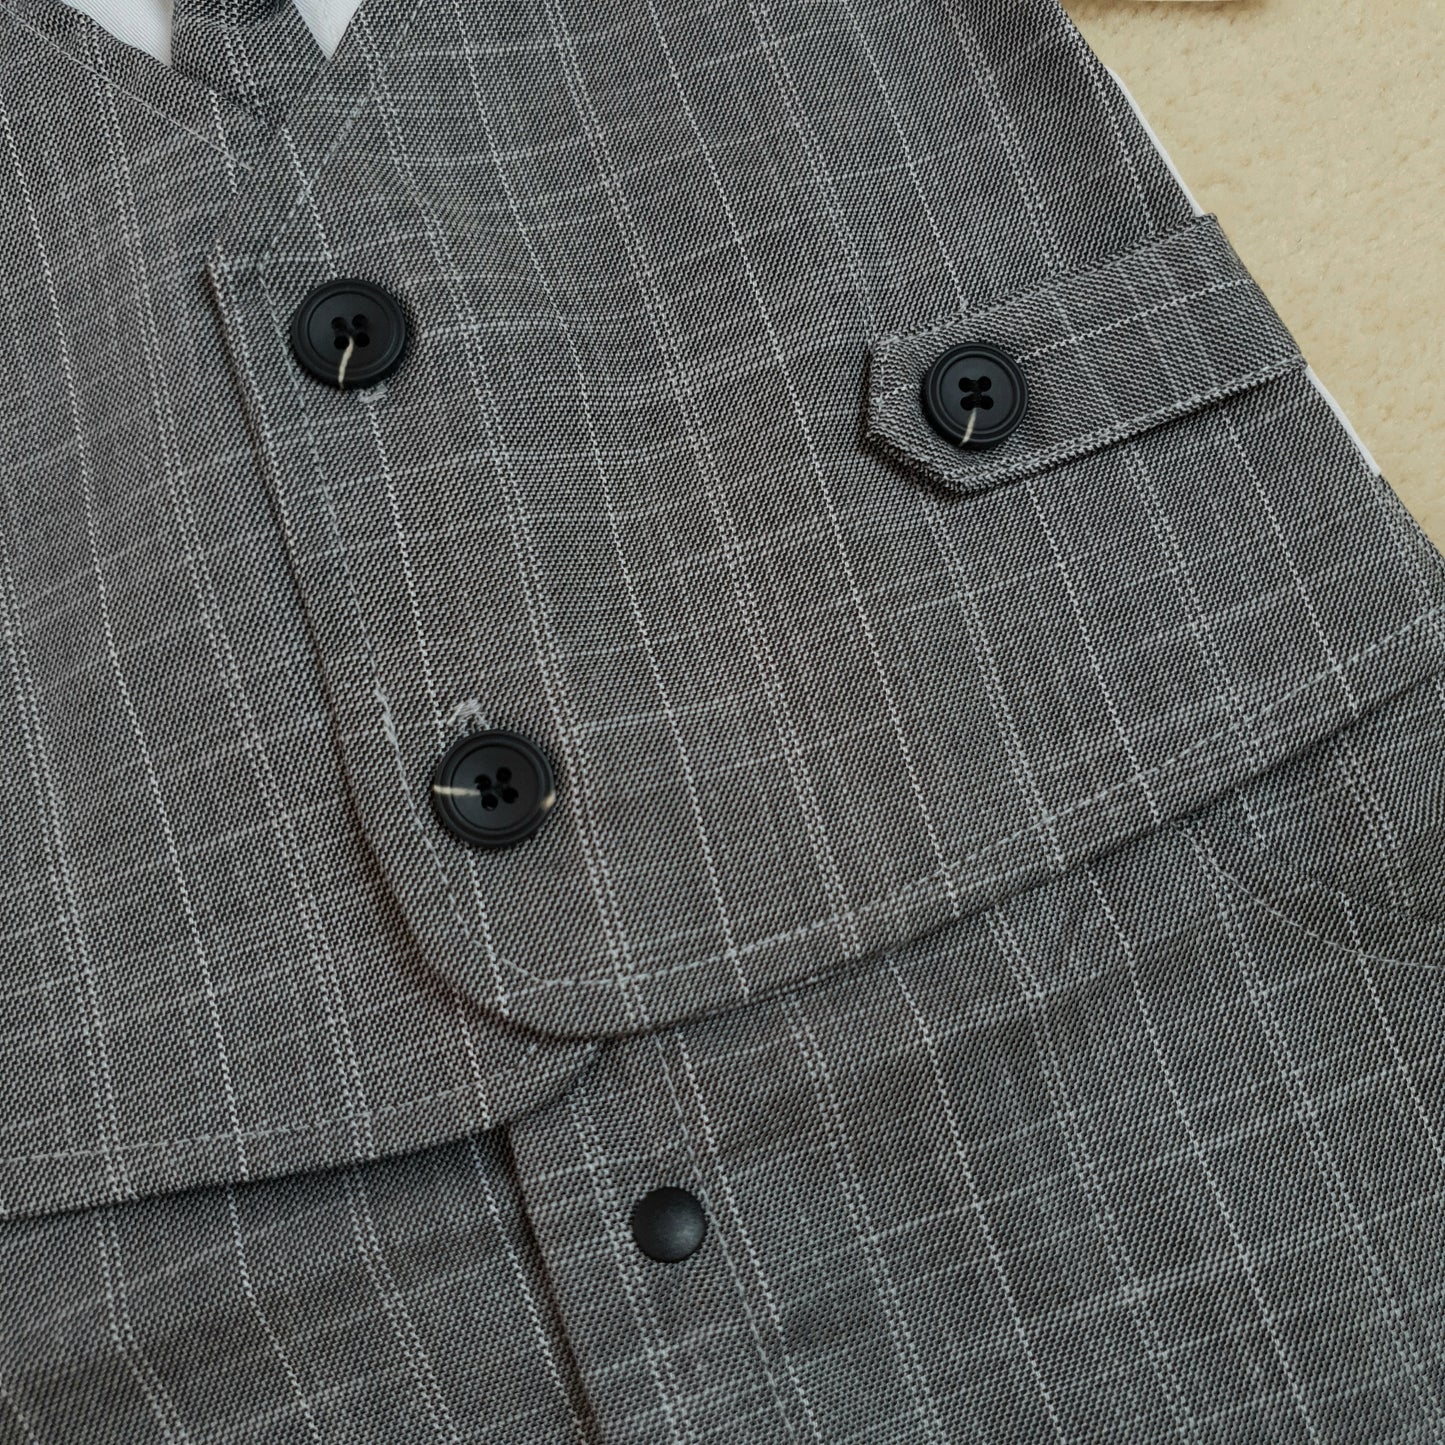 Lead grey plaid summer suit romper